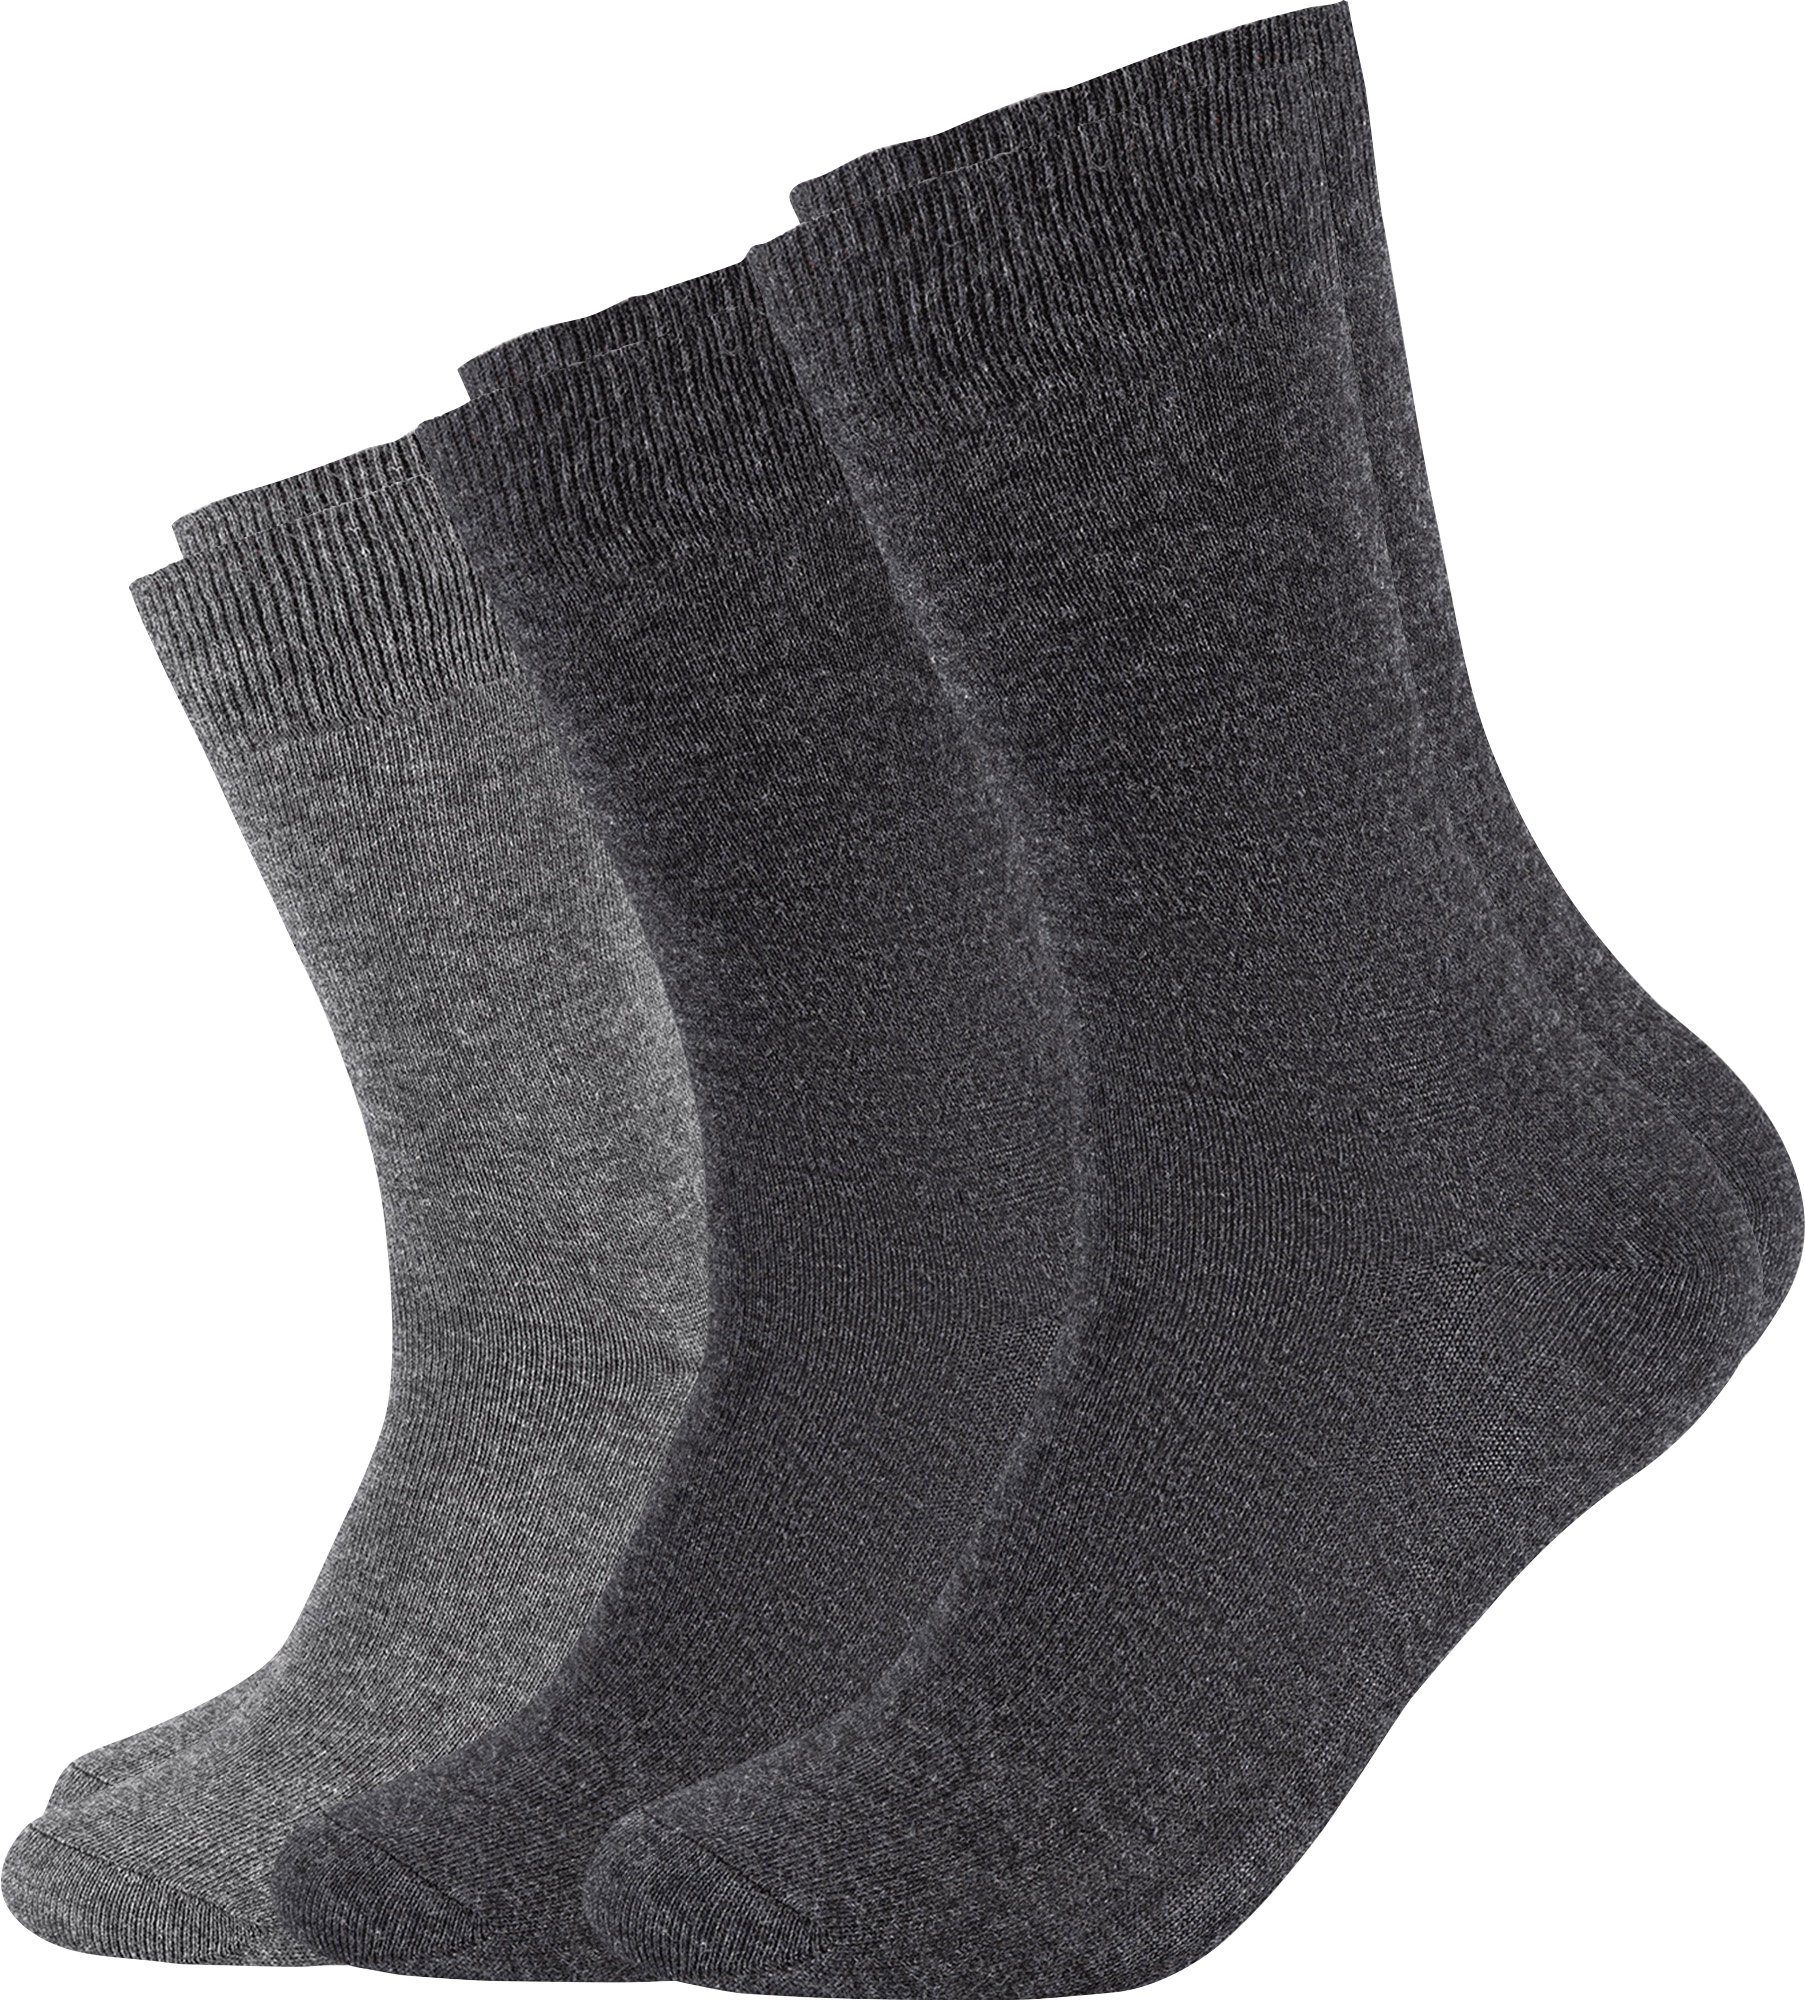 Uni grau/anthrazit s.Oliver Paar Unisex-Socken 3 Socken